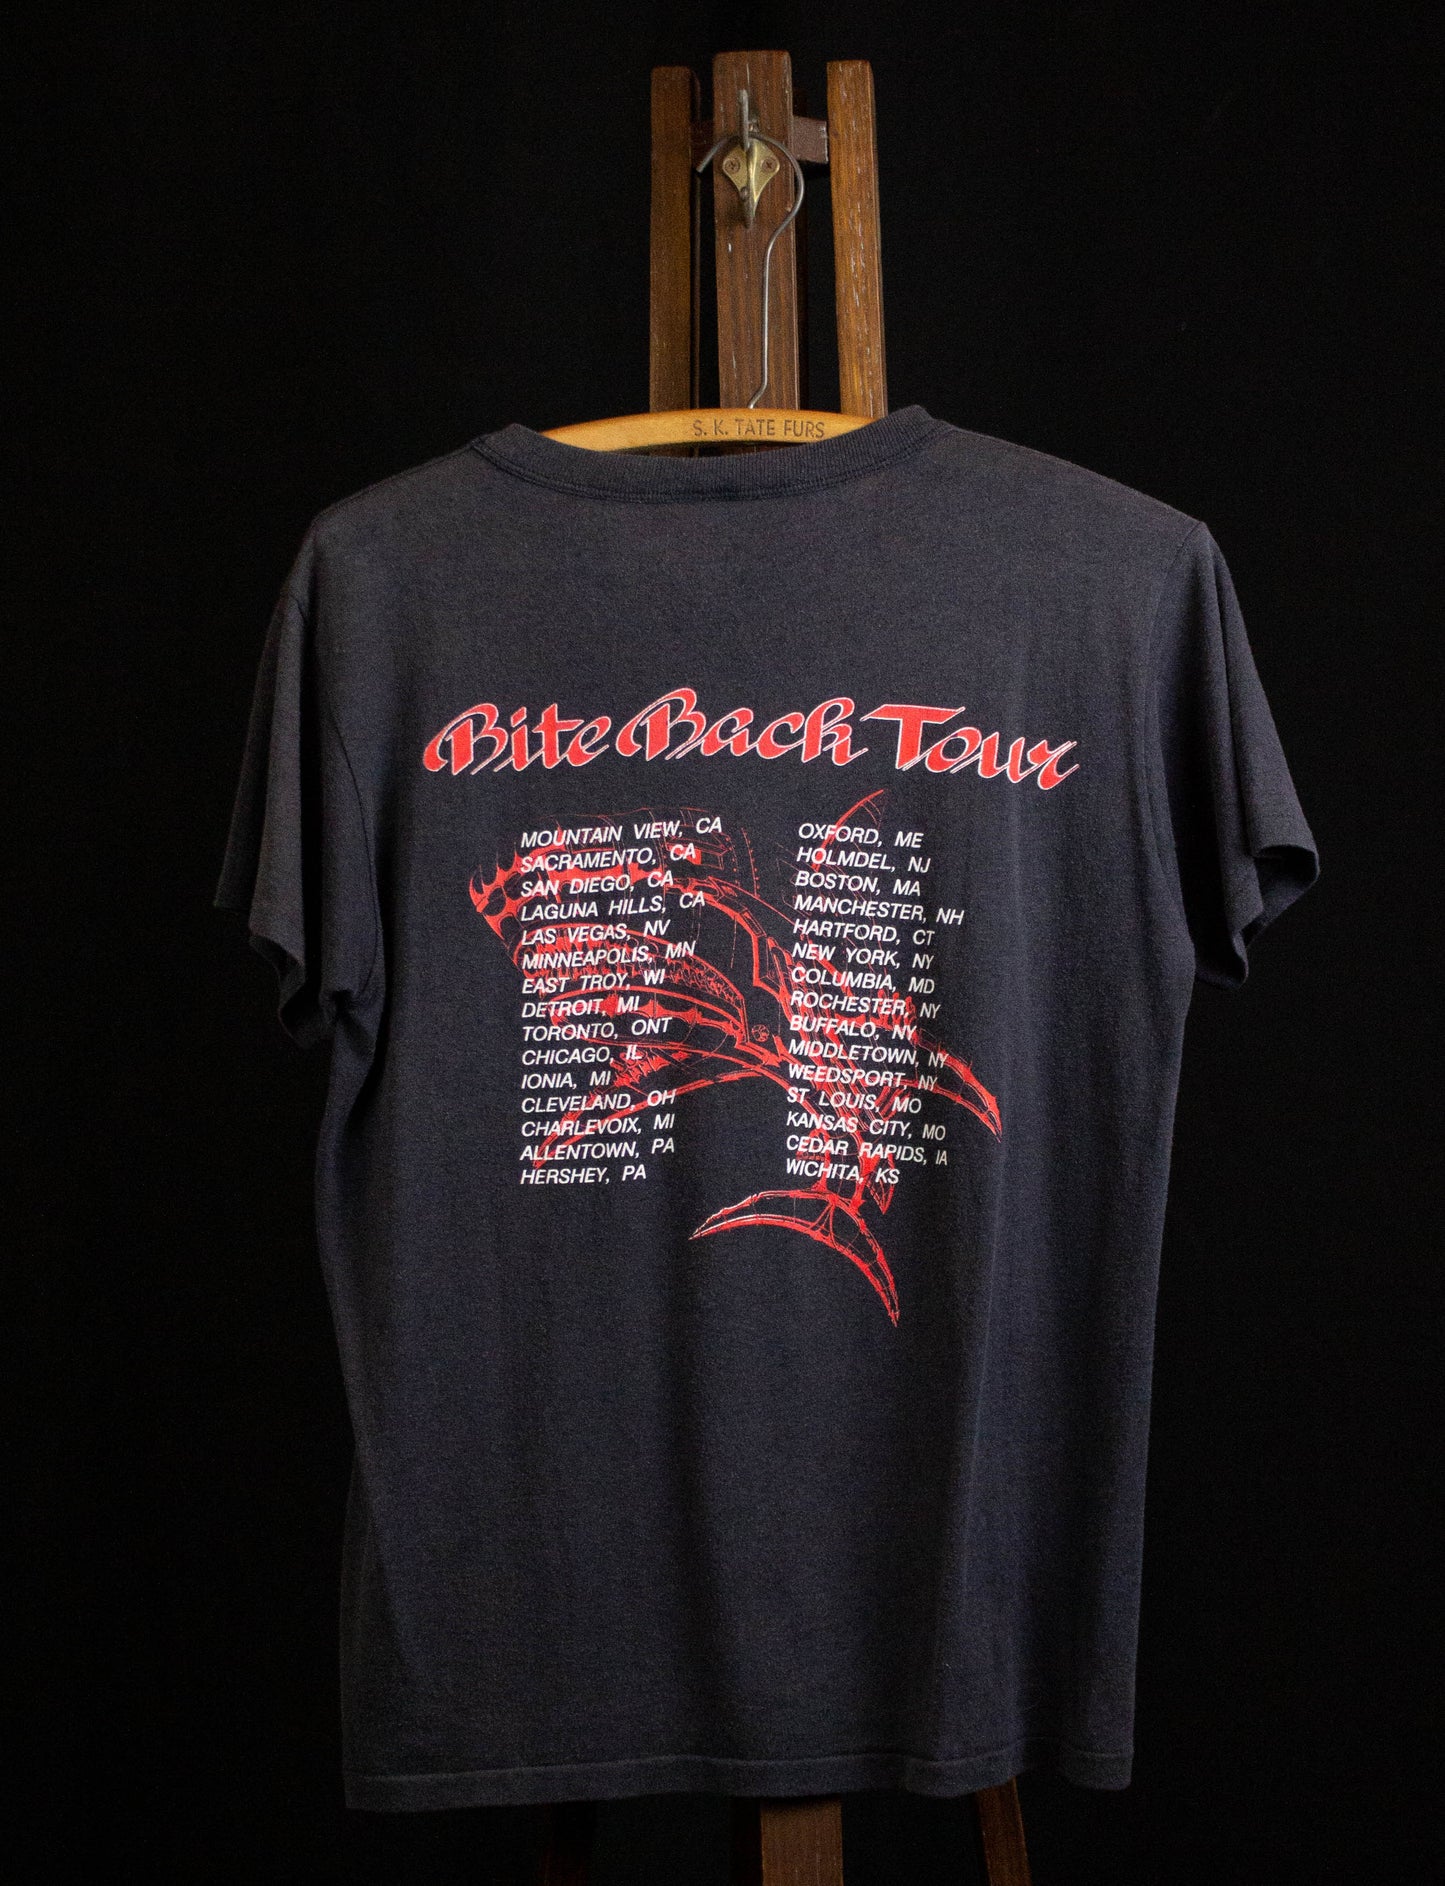 Vintage 1988 Great White Bite Back Tour Concert T Shirt Black Medium